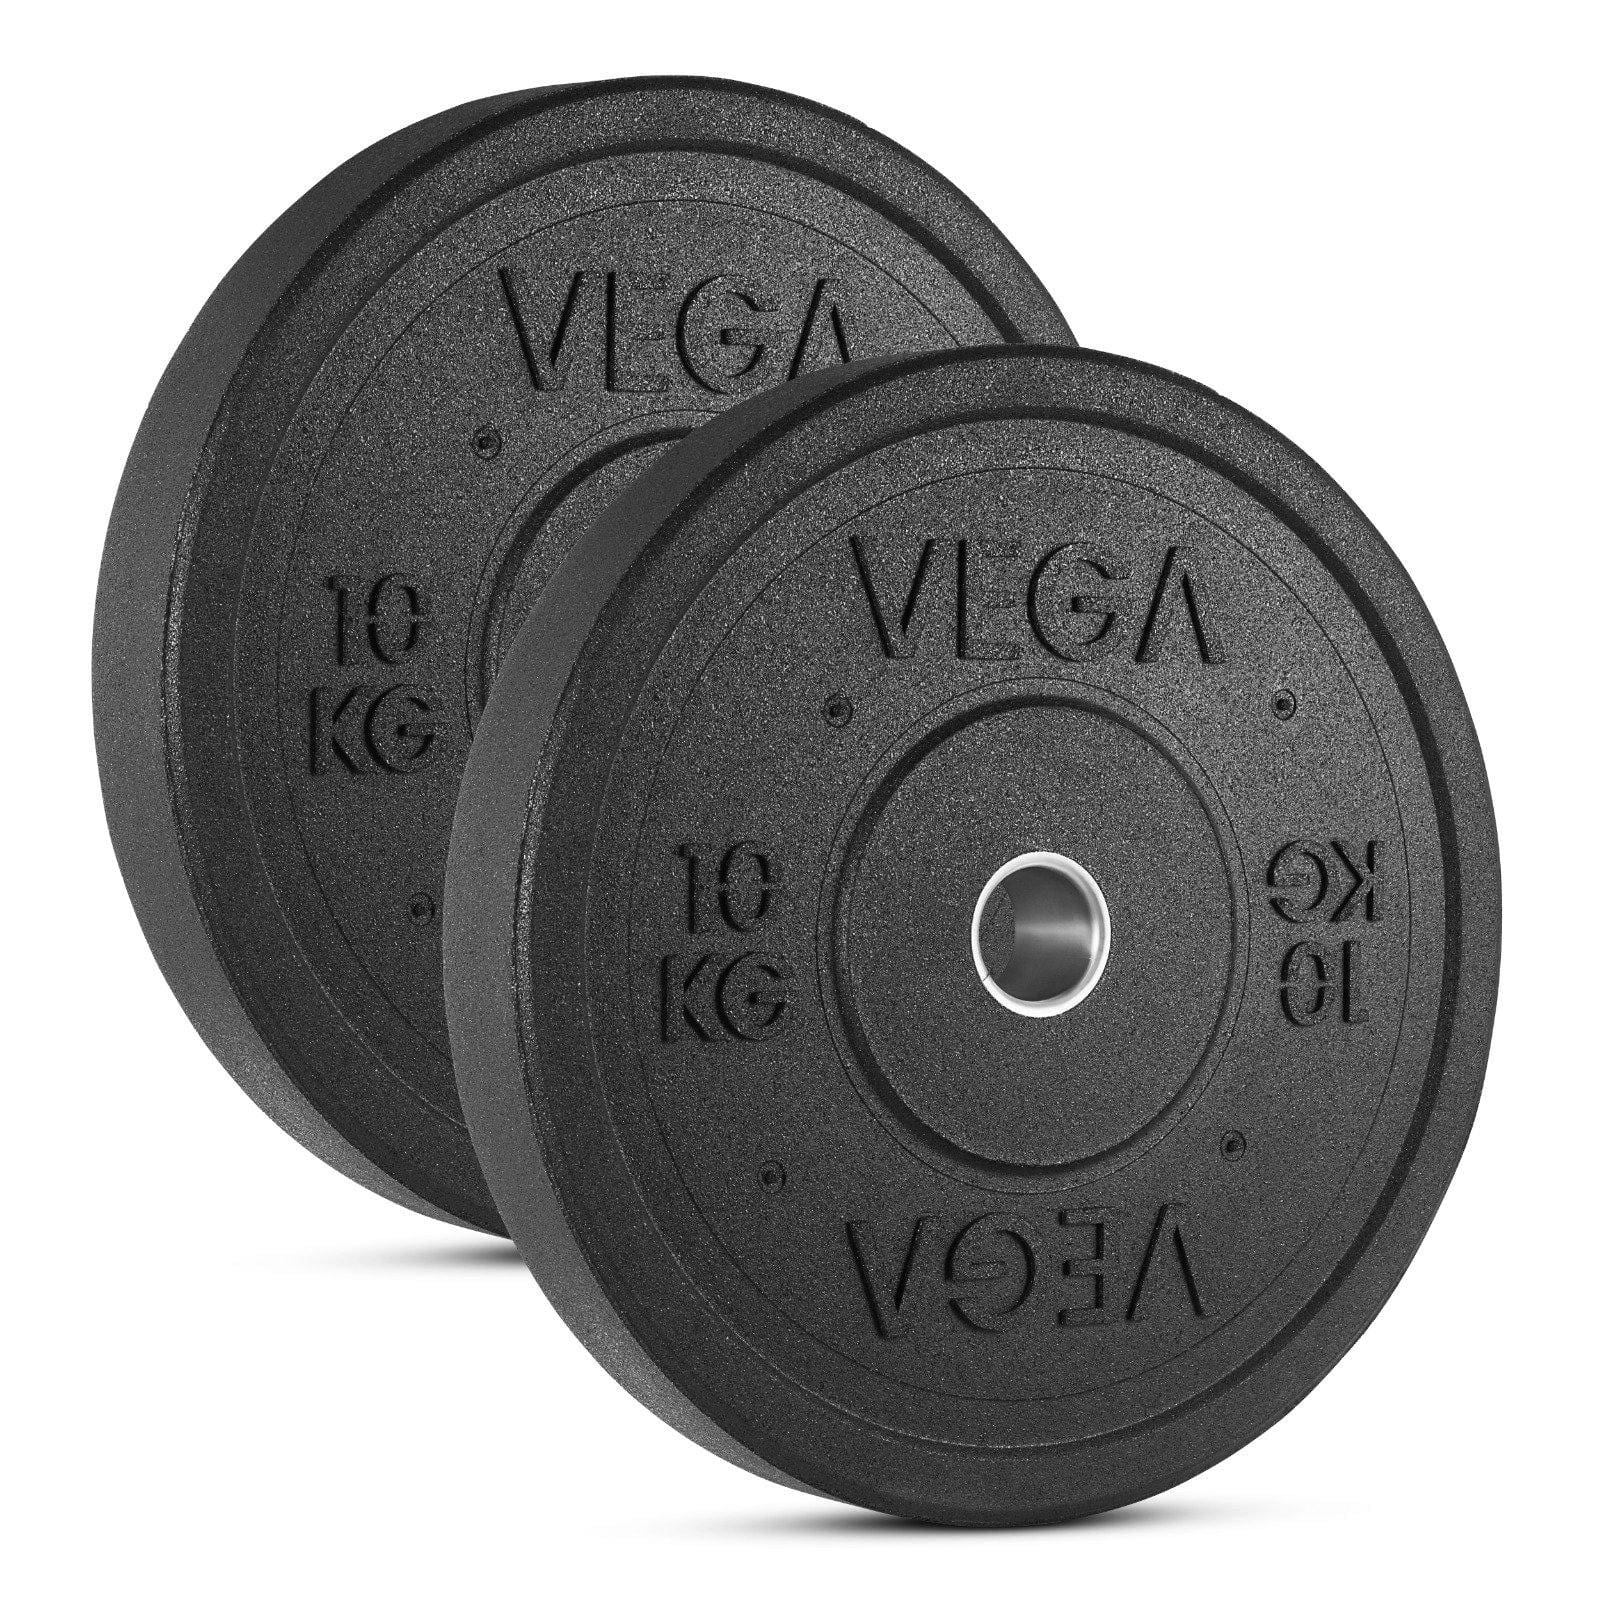 VEGA Fitness 100kg Rubber Bumper Plate Set with 7ft Escape Olympic Power Bar 10kg